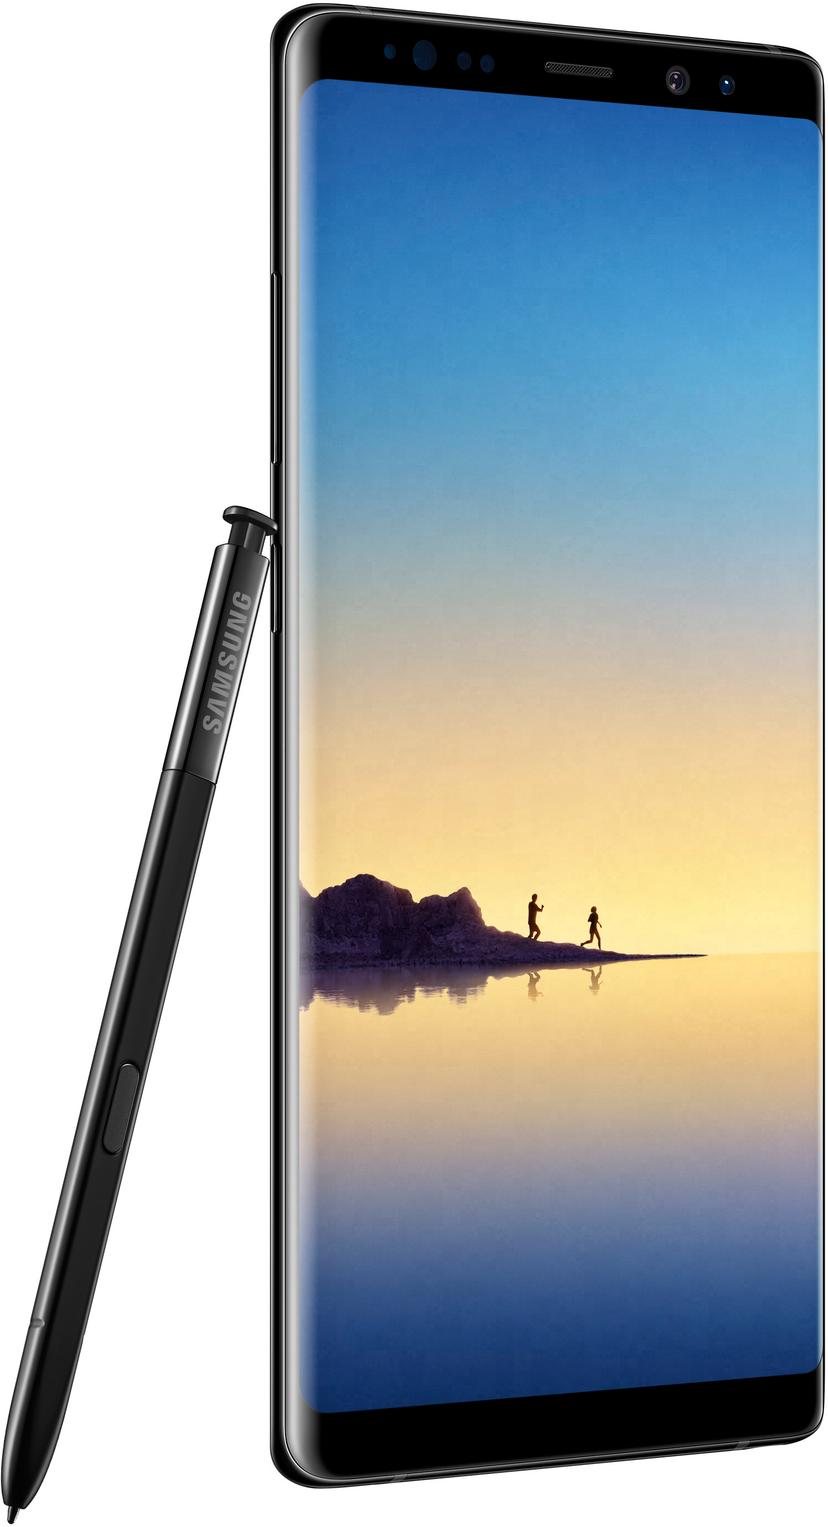 Samsung Galaxy Note8 64GB Dual-SIM Midnat sort